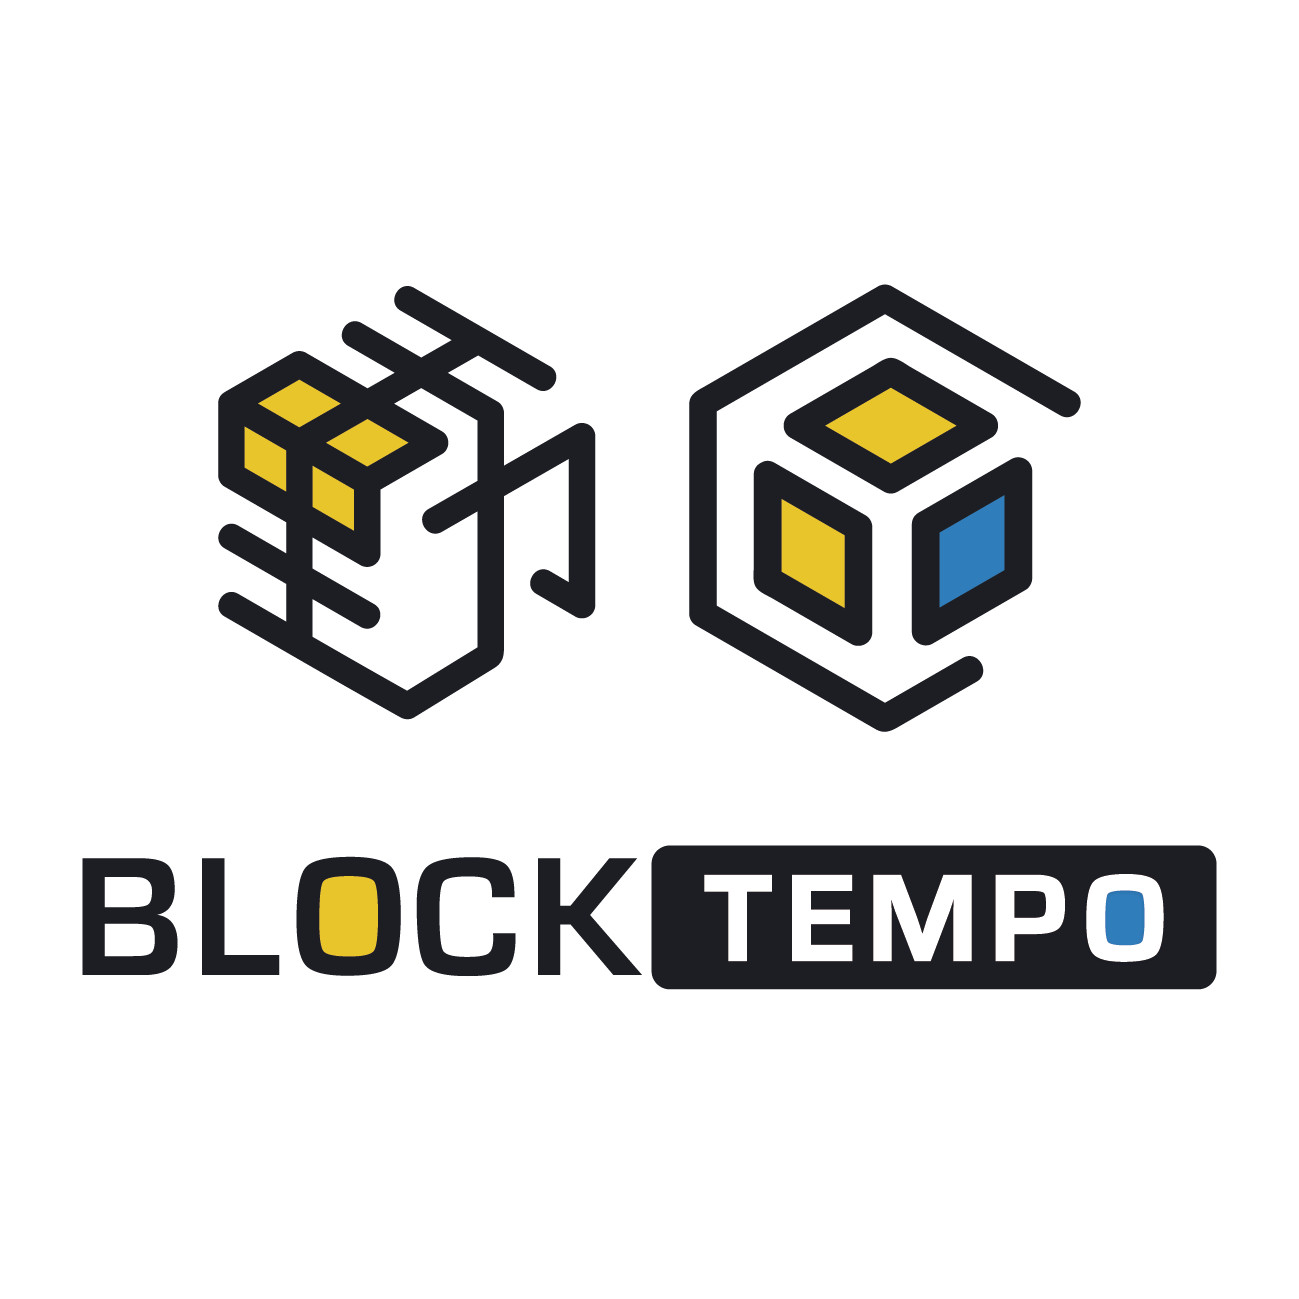 Avatar of BlockTempo HR.